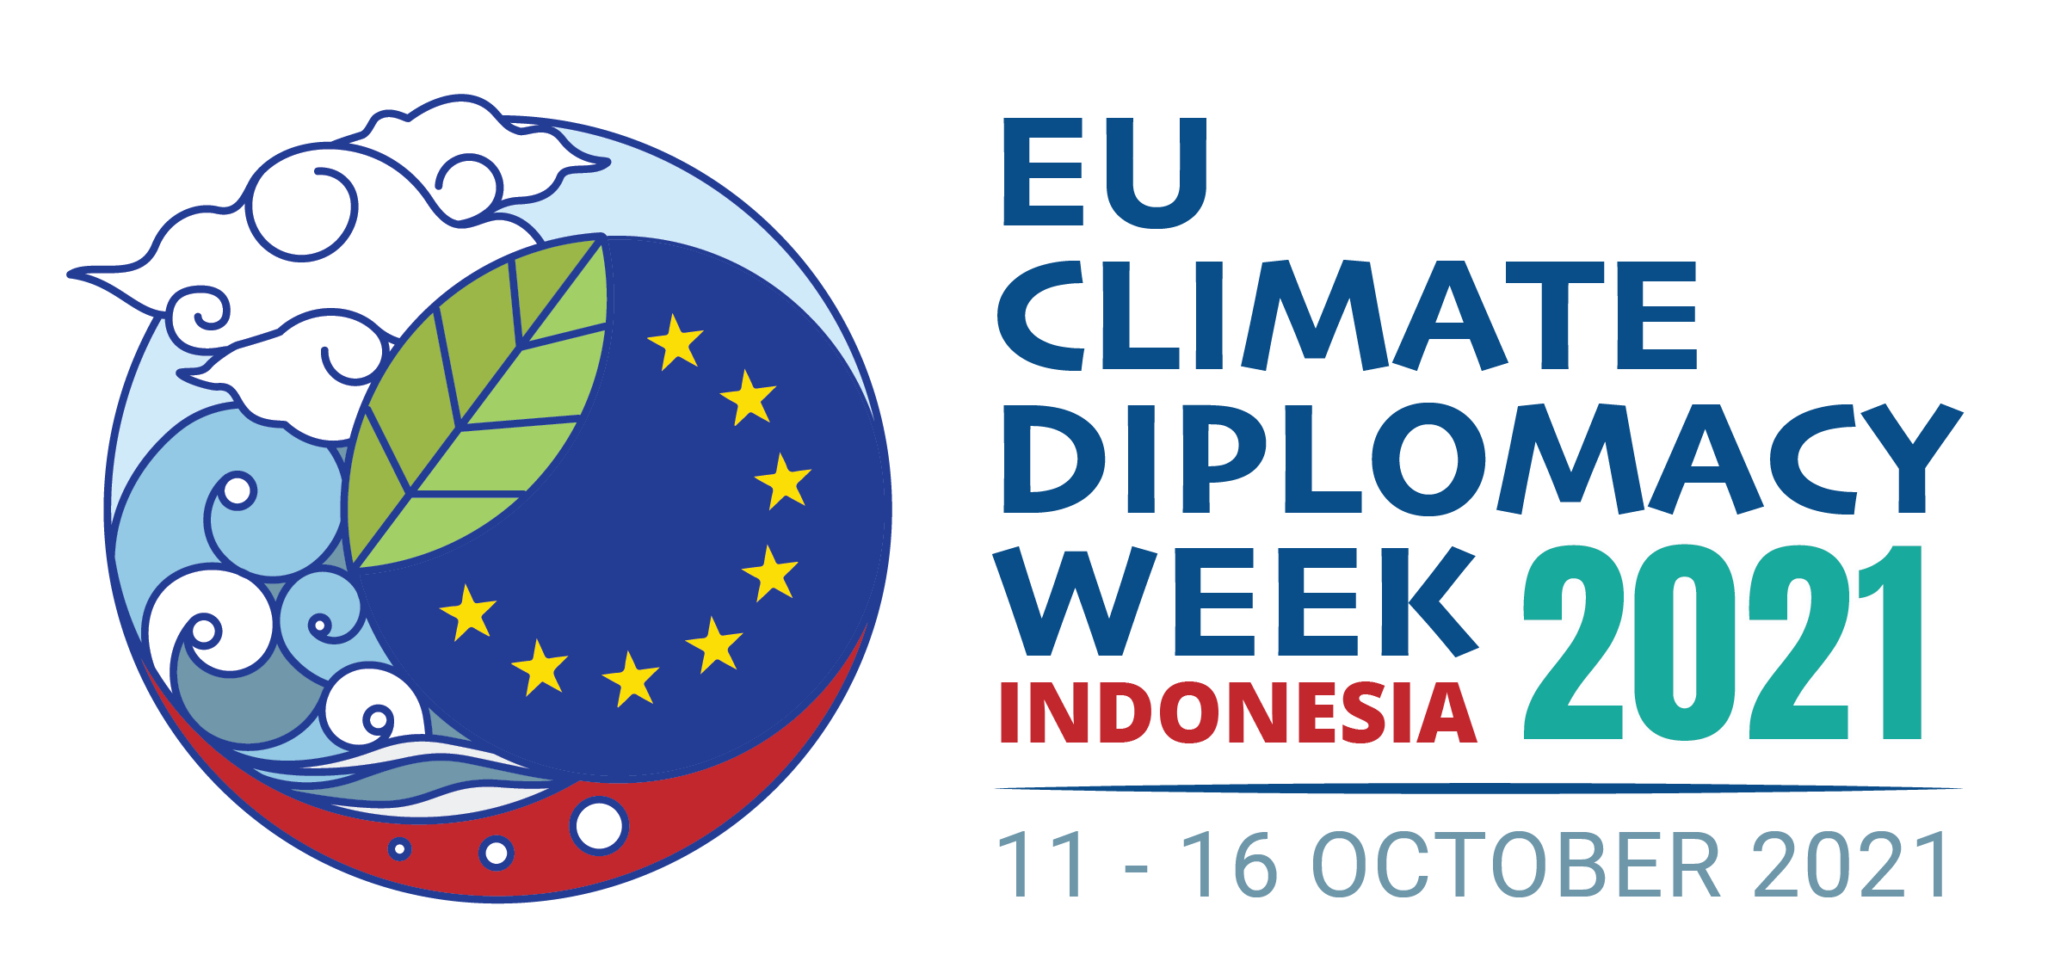 EU Climate Week in Indonesia 2021